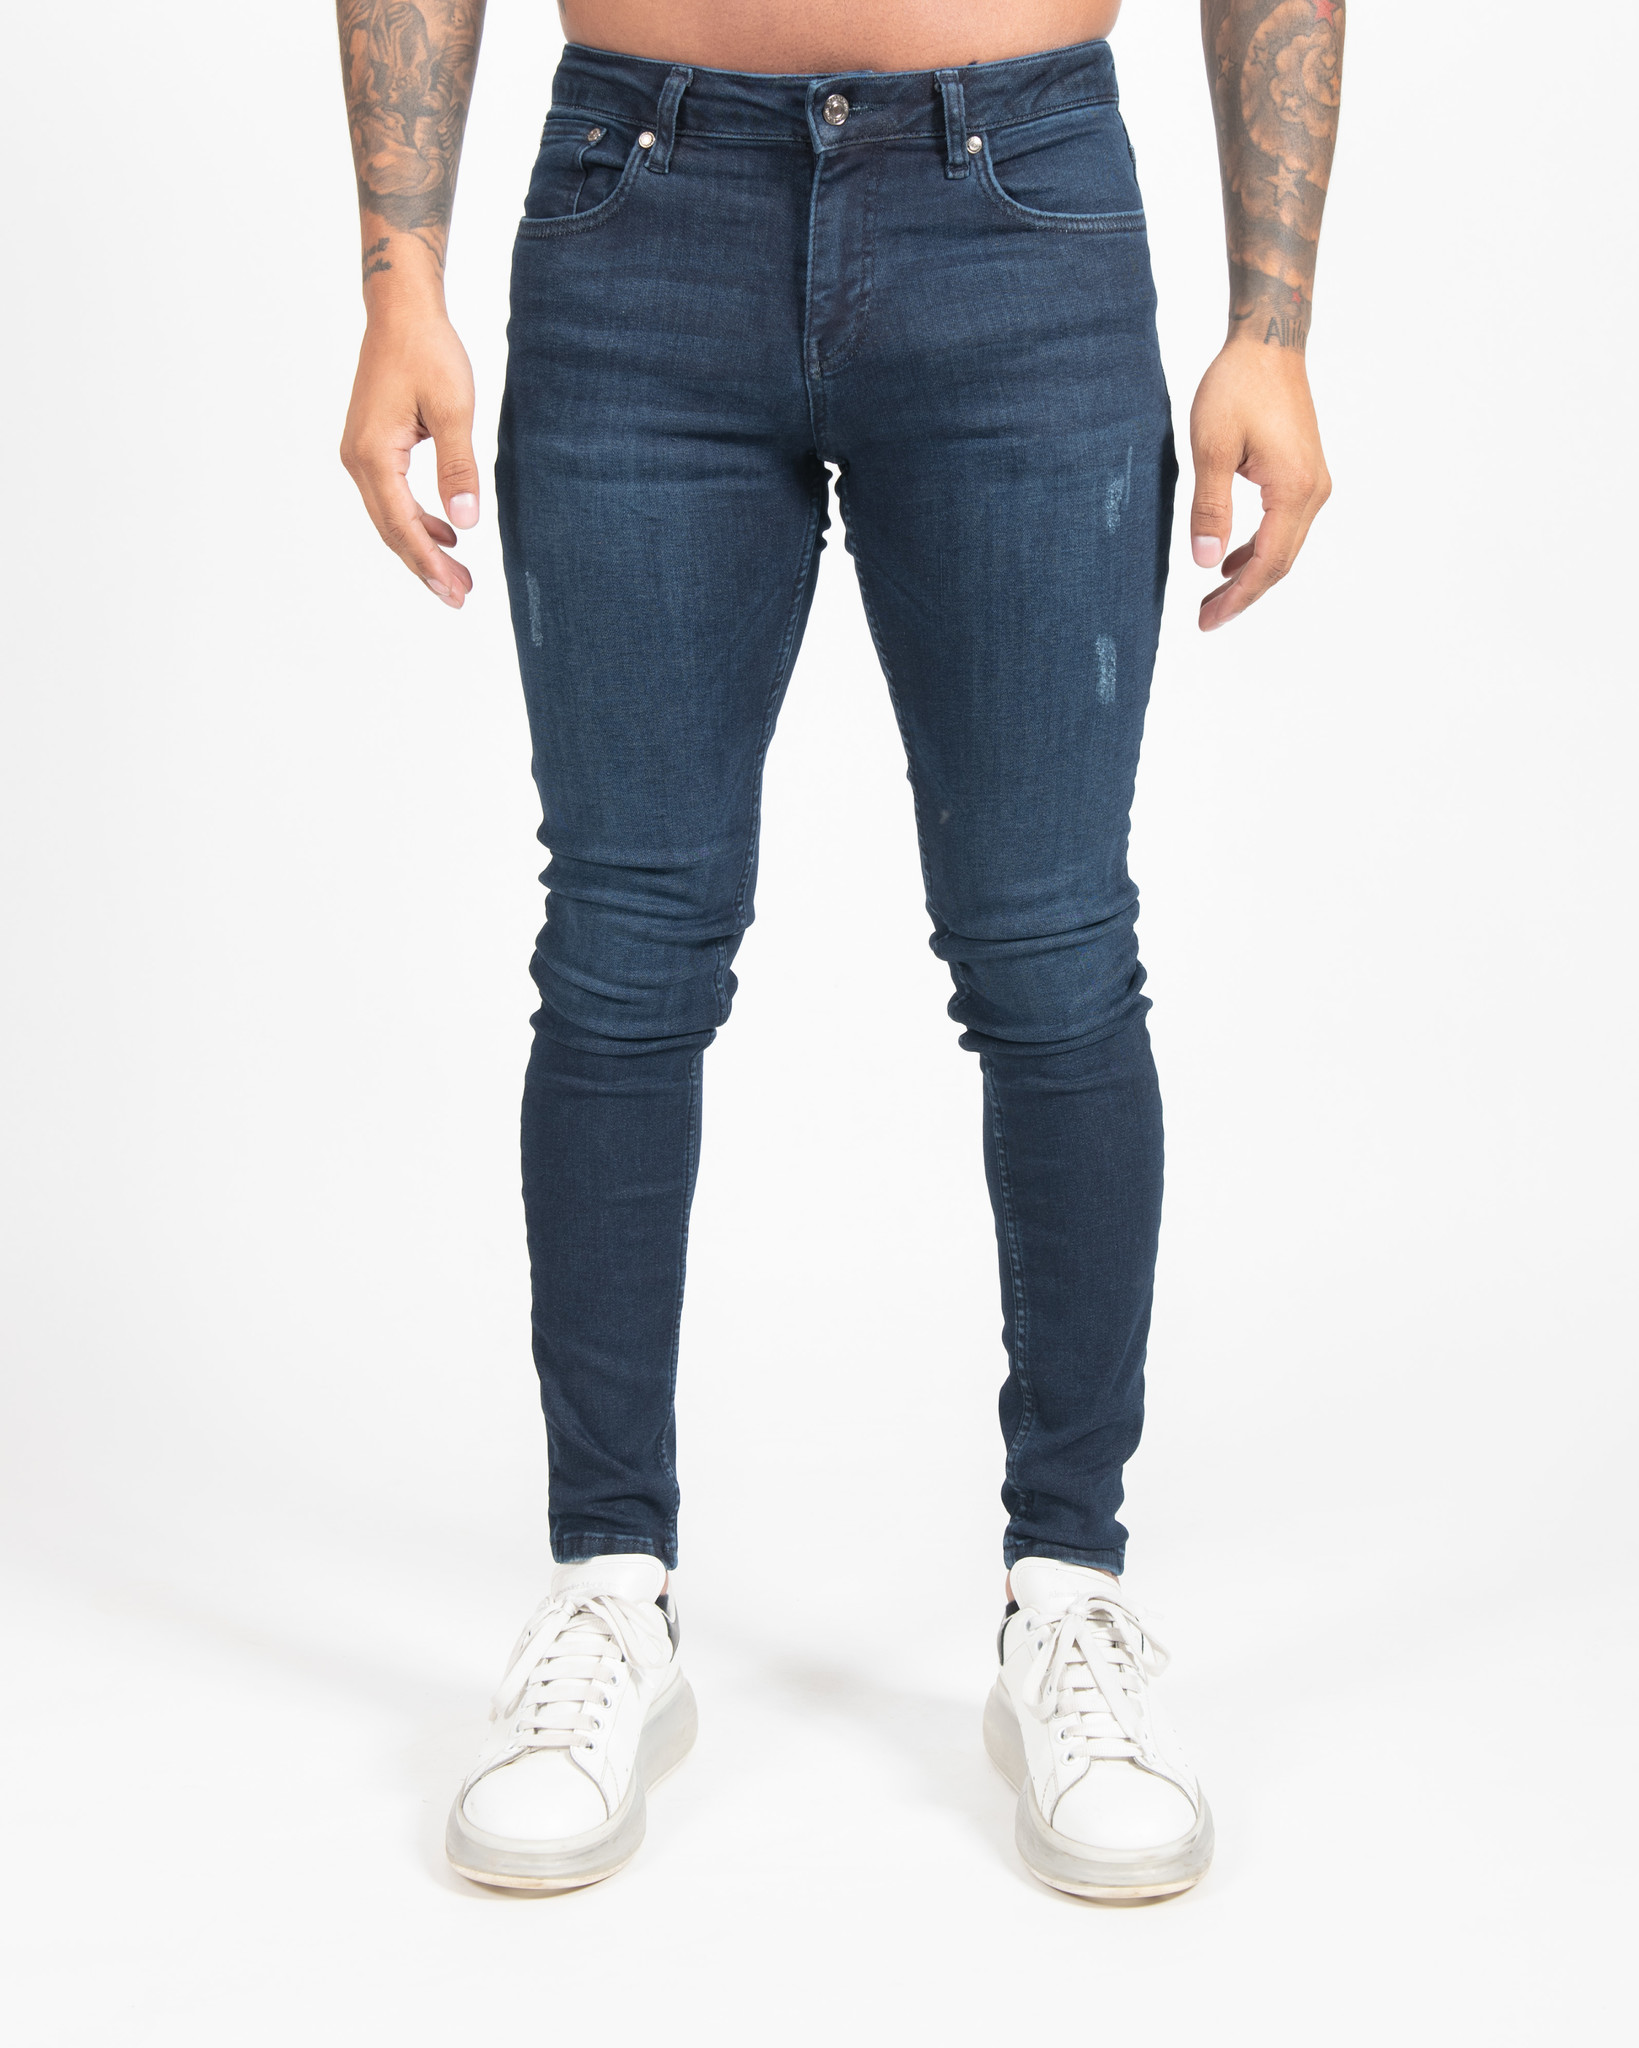 Malelions Basic Super Stretch Jeans - Dark Blue product